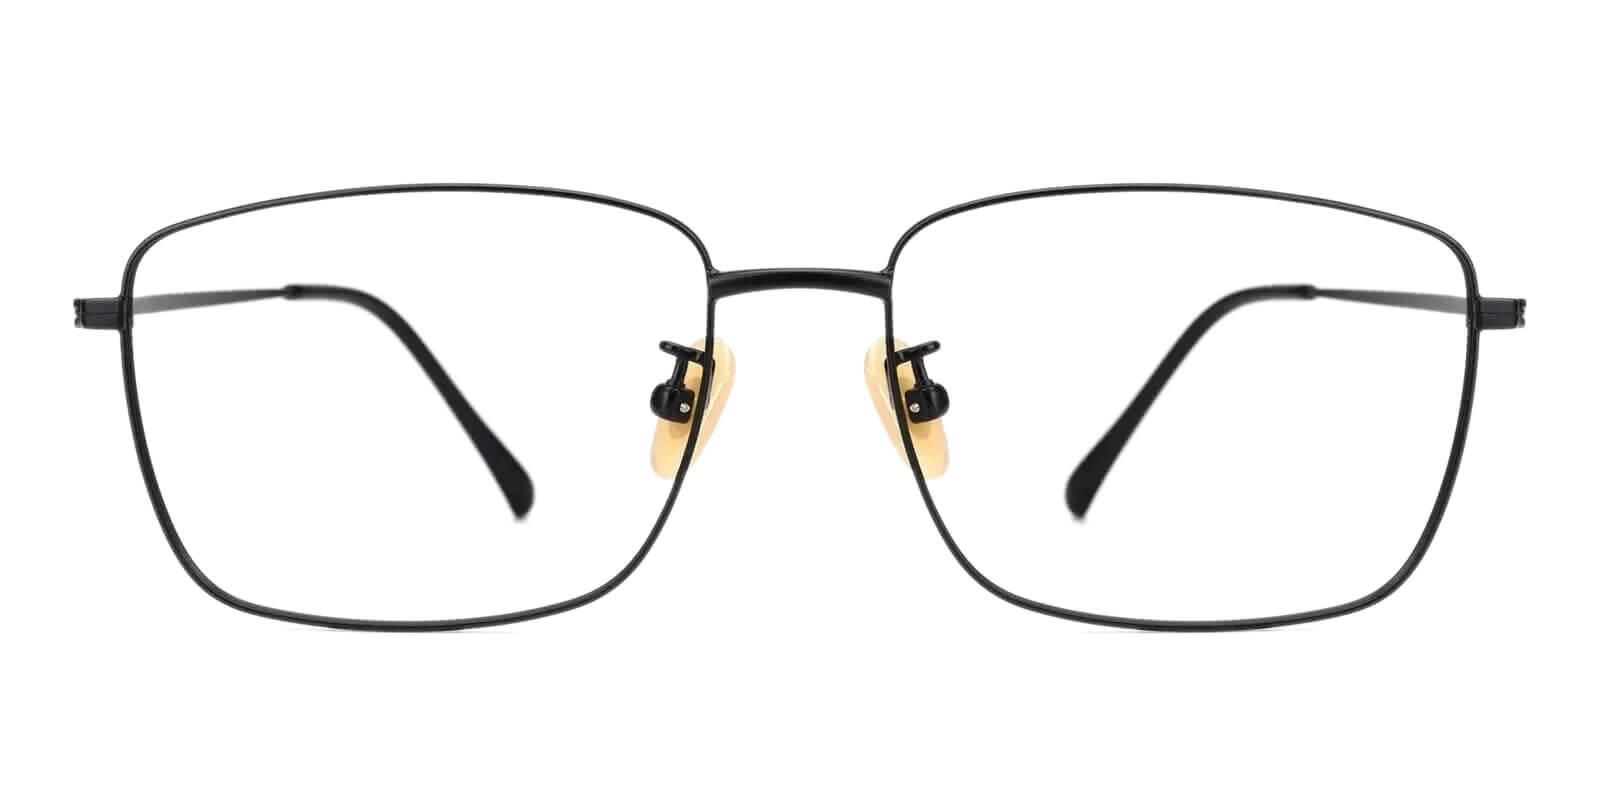 Morocco Black Titanium Lightweight , NosePads , Eyeglasses Frames from ABBE Glasses